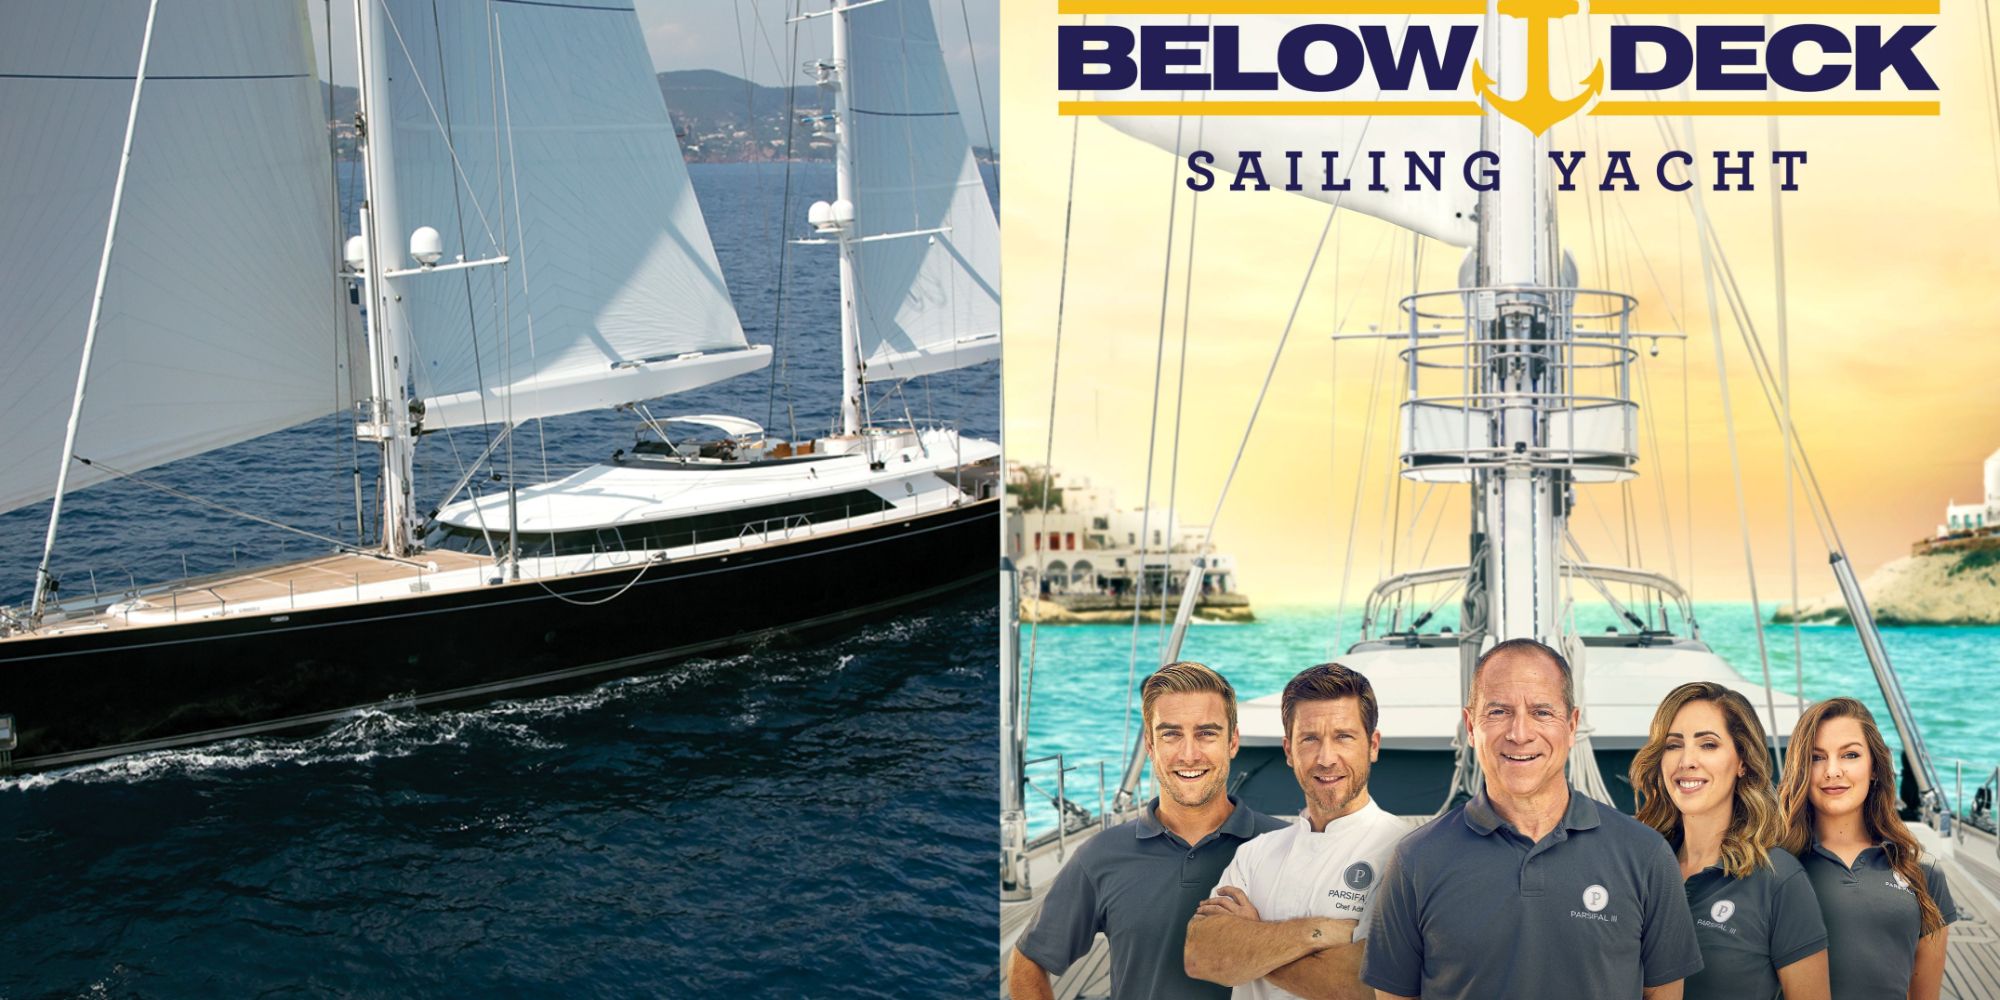 Split Image Below Deck Promo and Sailing Yacht